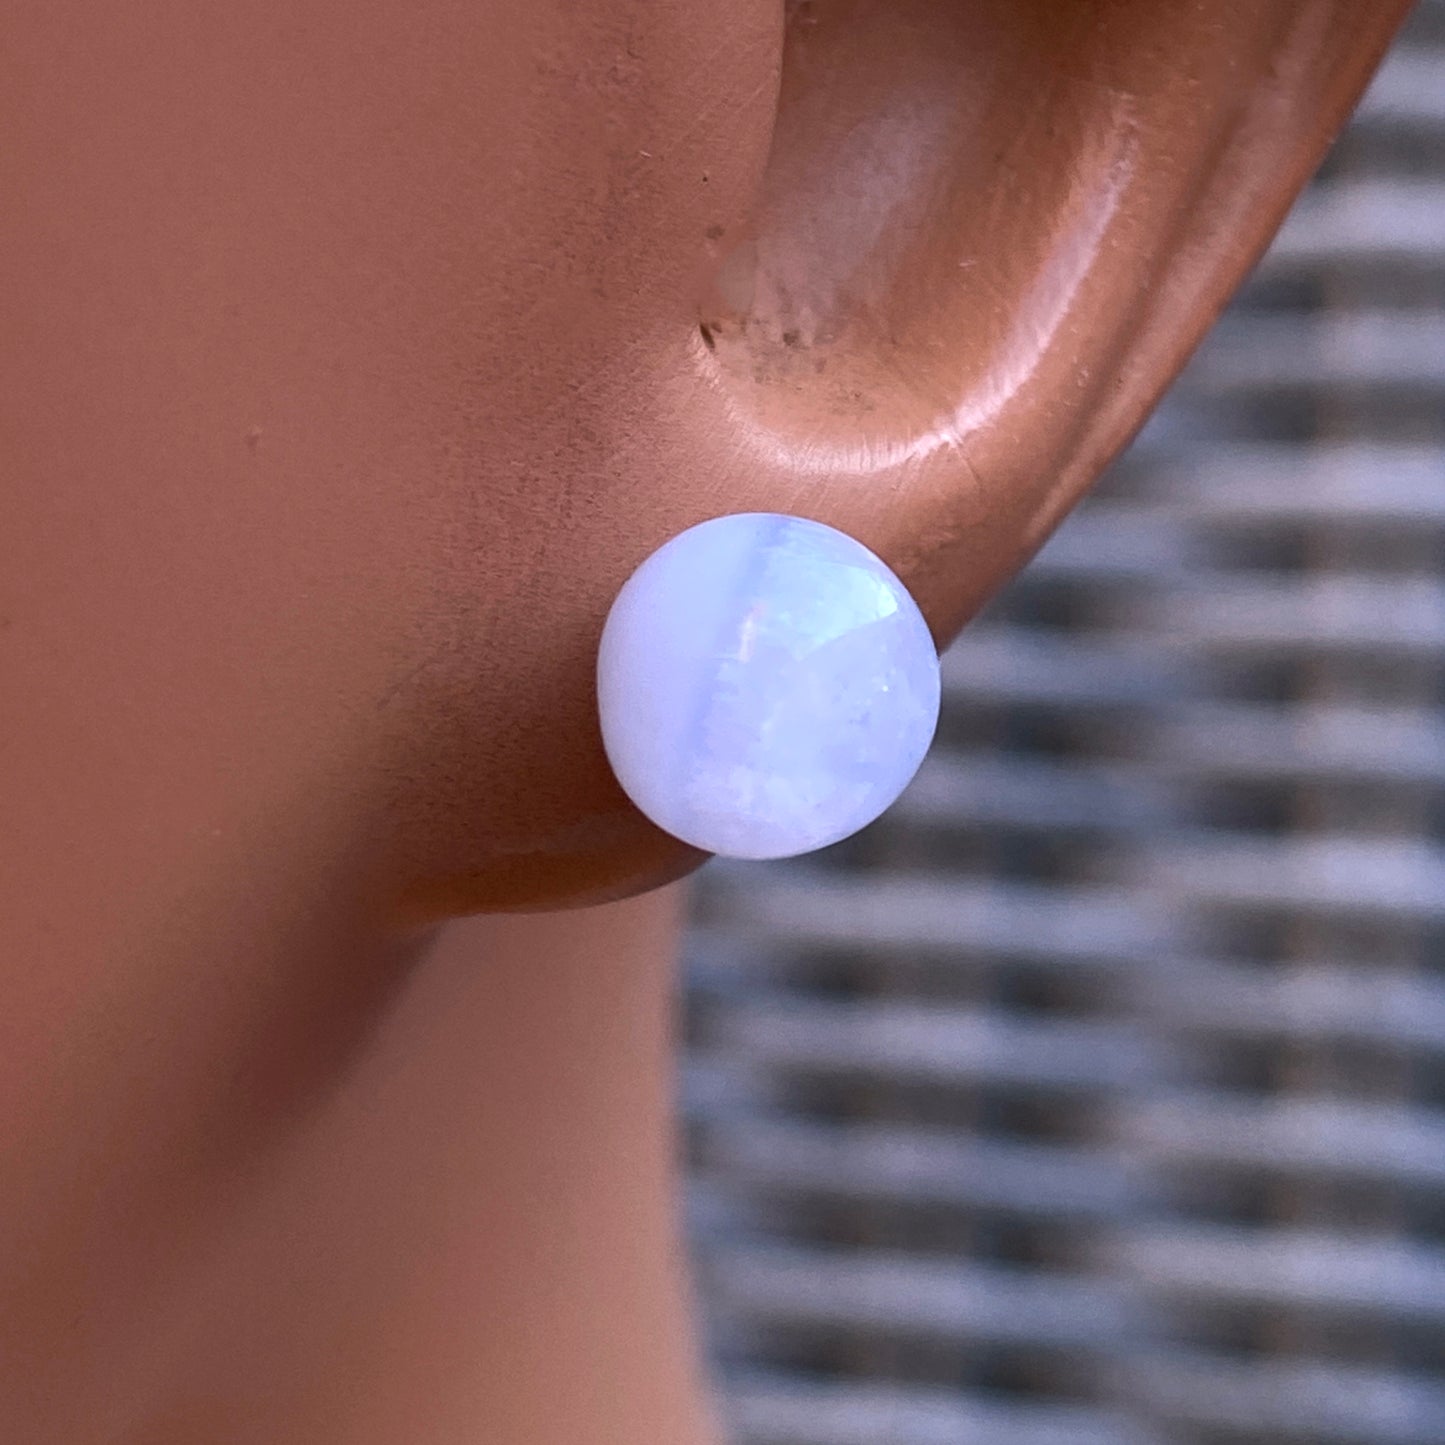 Blue lace agate gemstone stud earrings